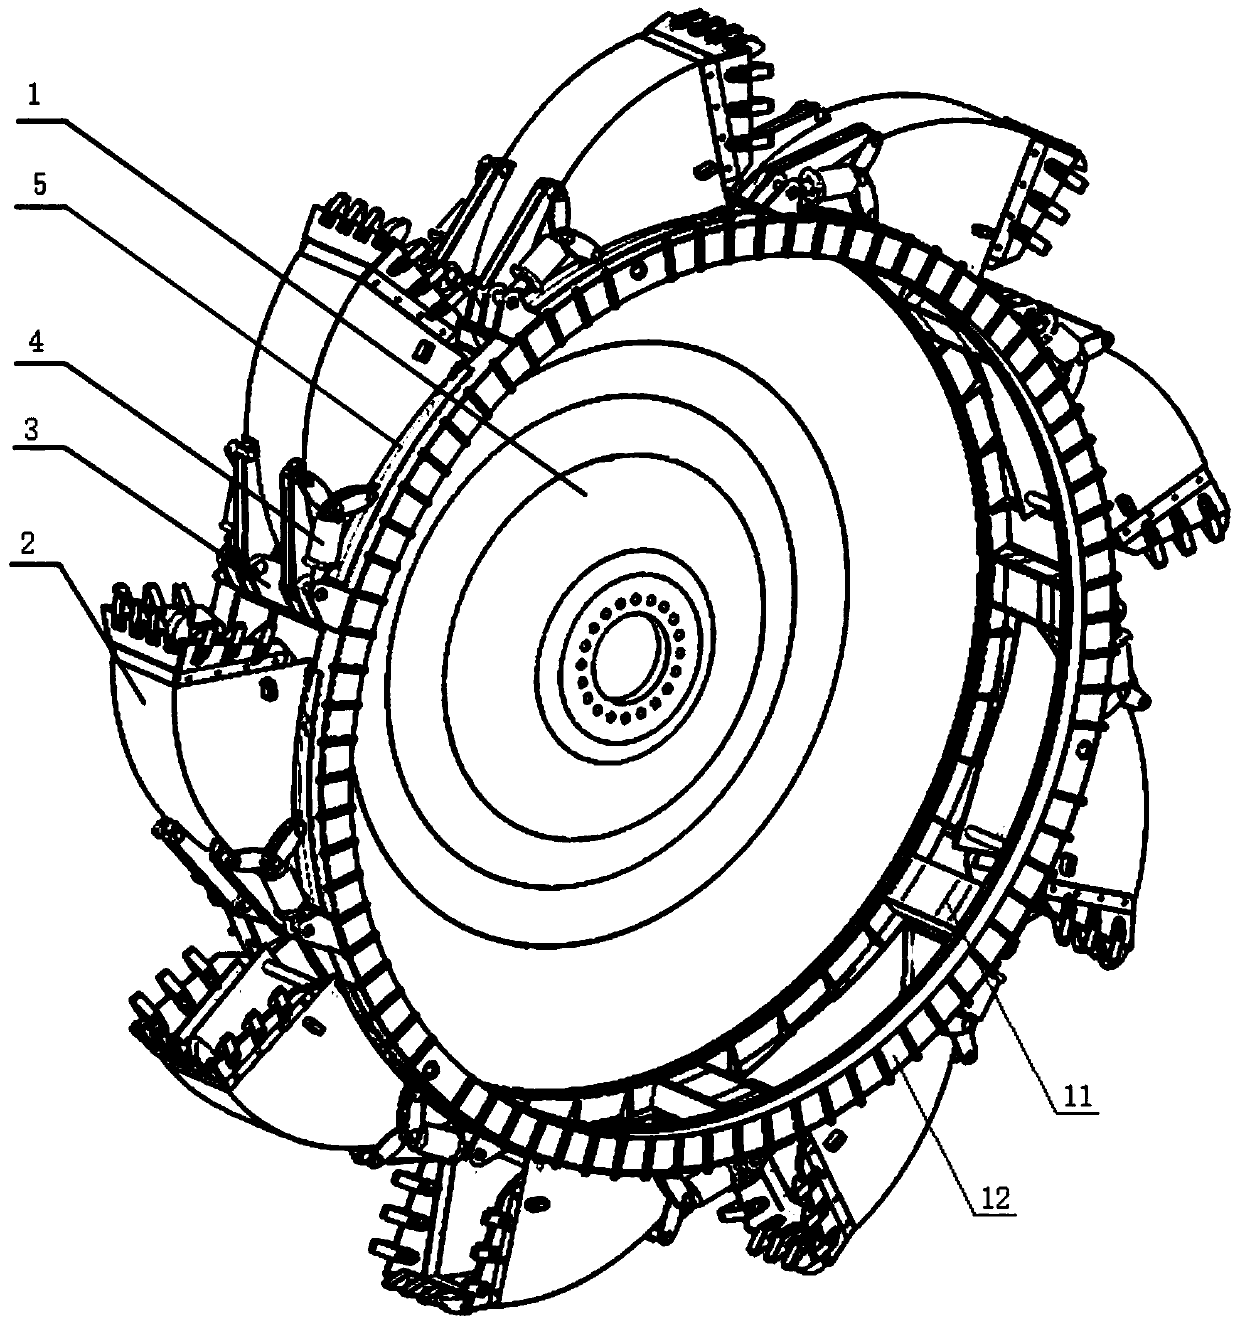 Rigid-flexible coupling self-adaptive bucket wheel device